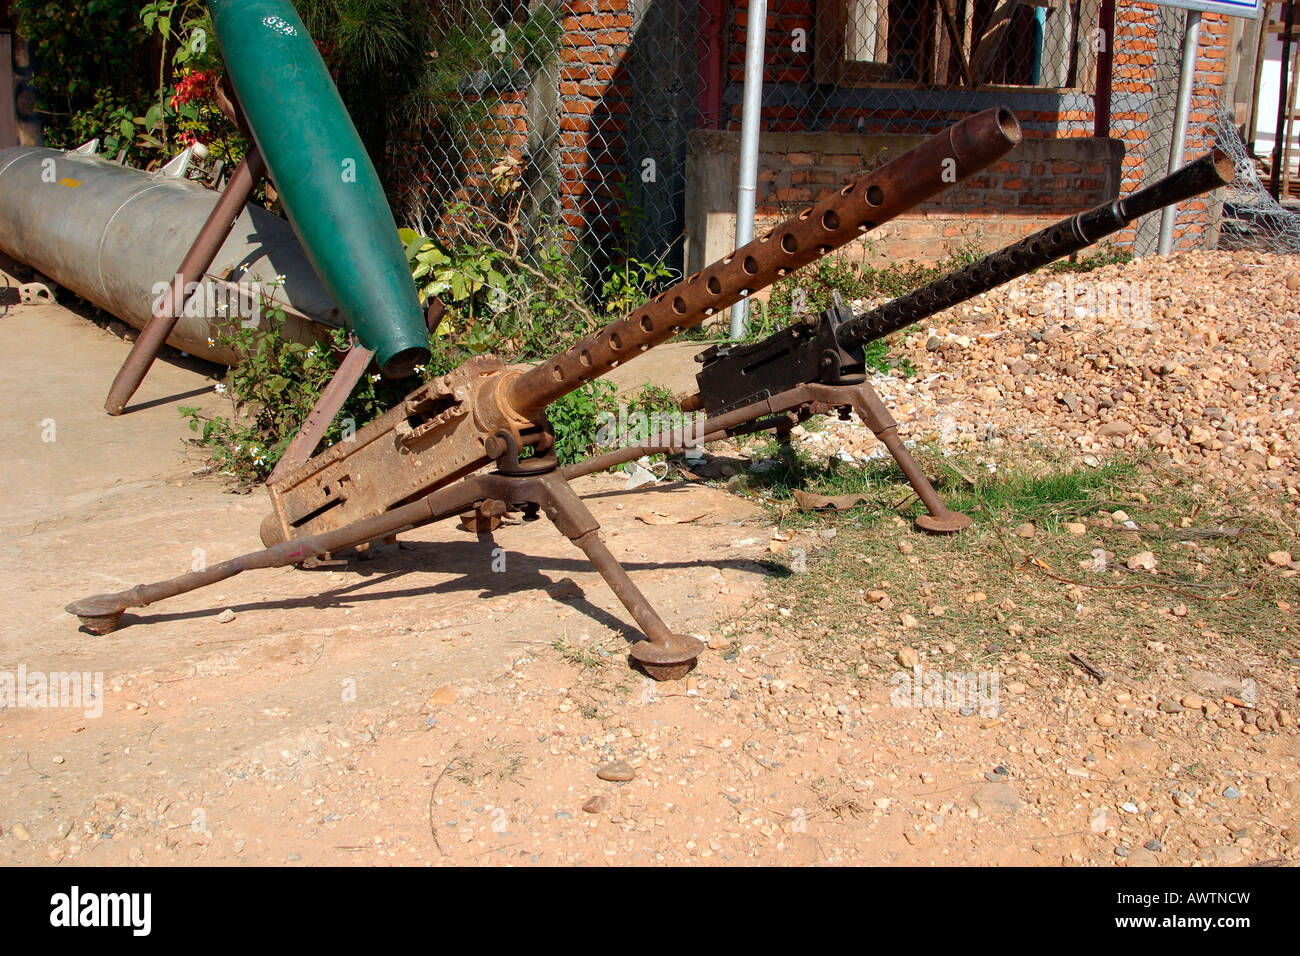 Laos Phonsavan Vietnam War armaments bomb casings and heavy machine guns outside hotel Stock Photo